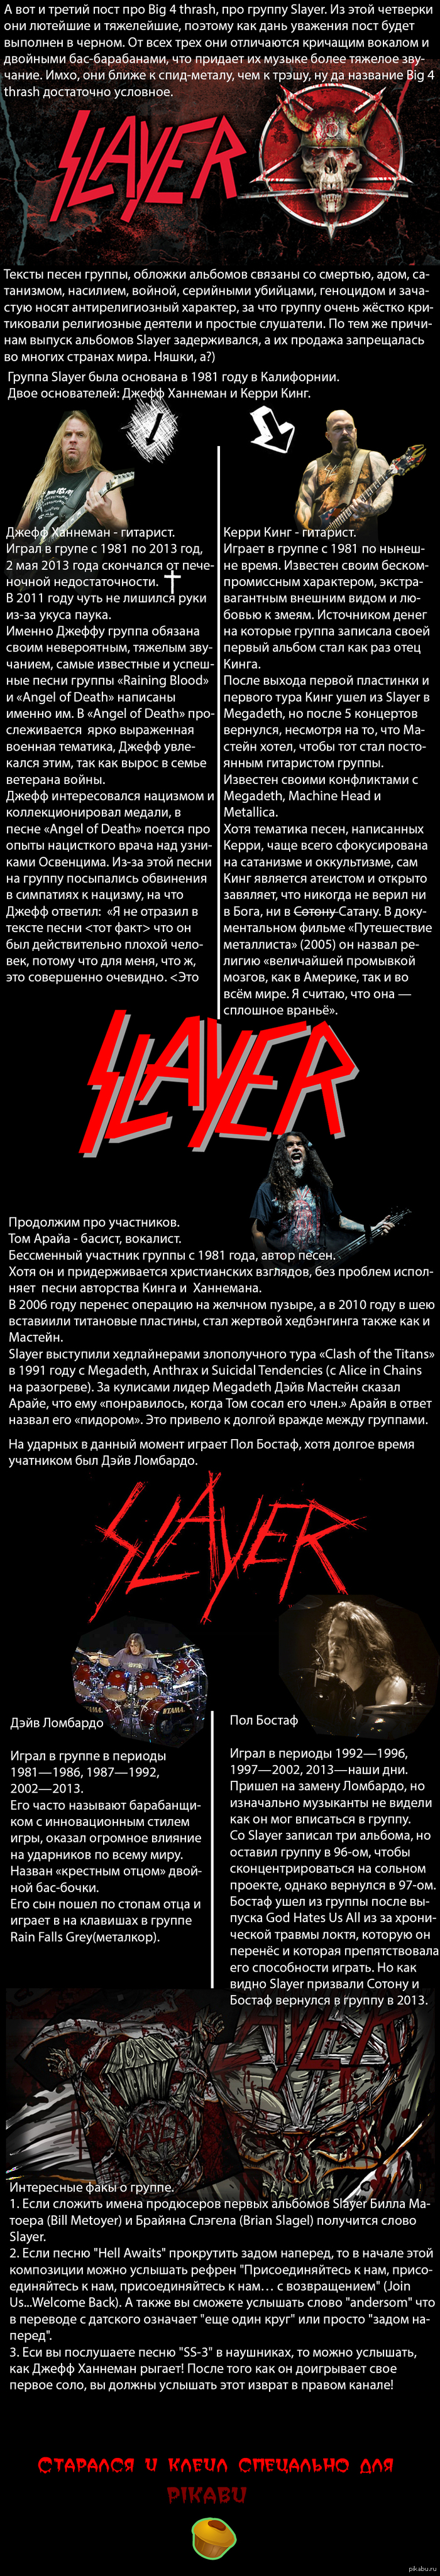   - .3 Slayer 